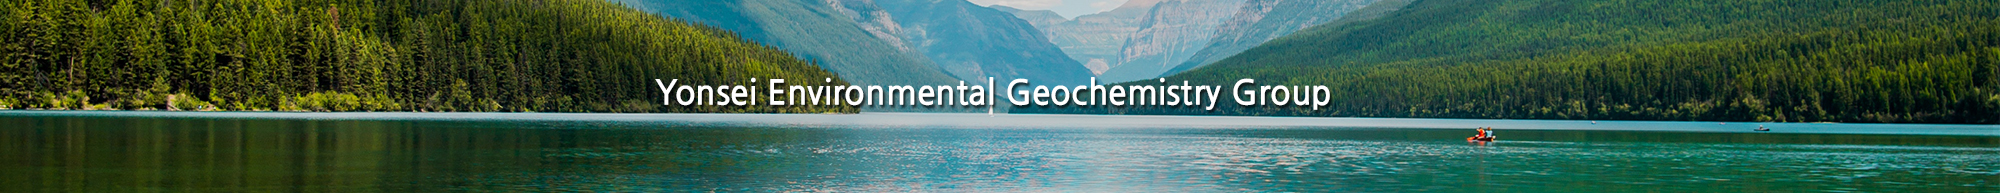 YEGG Yonsei Environmental Geochemistry Group